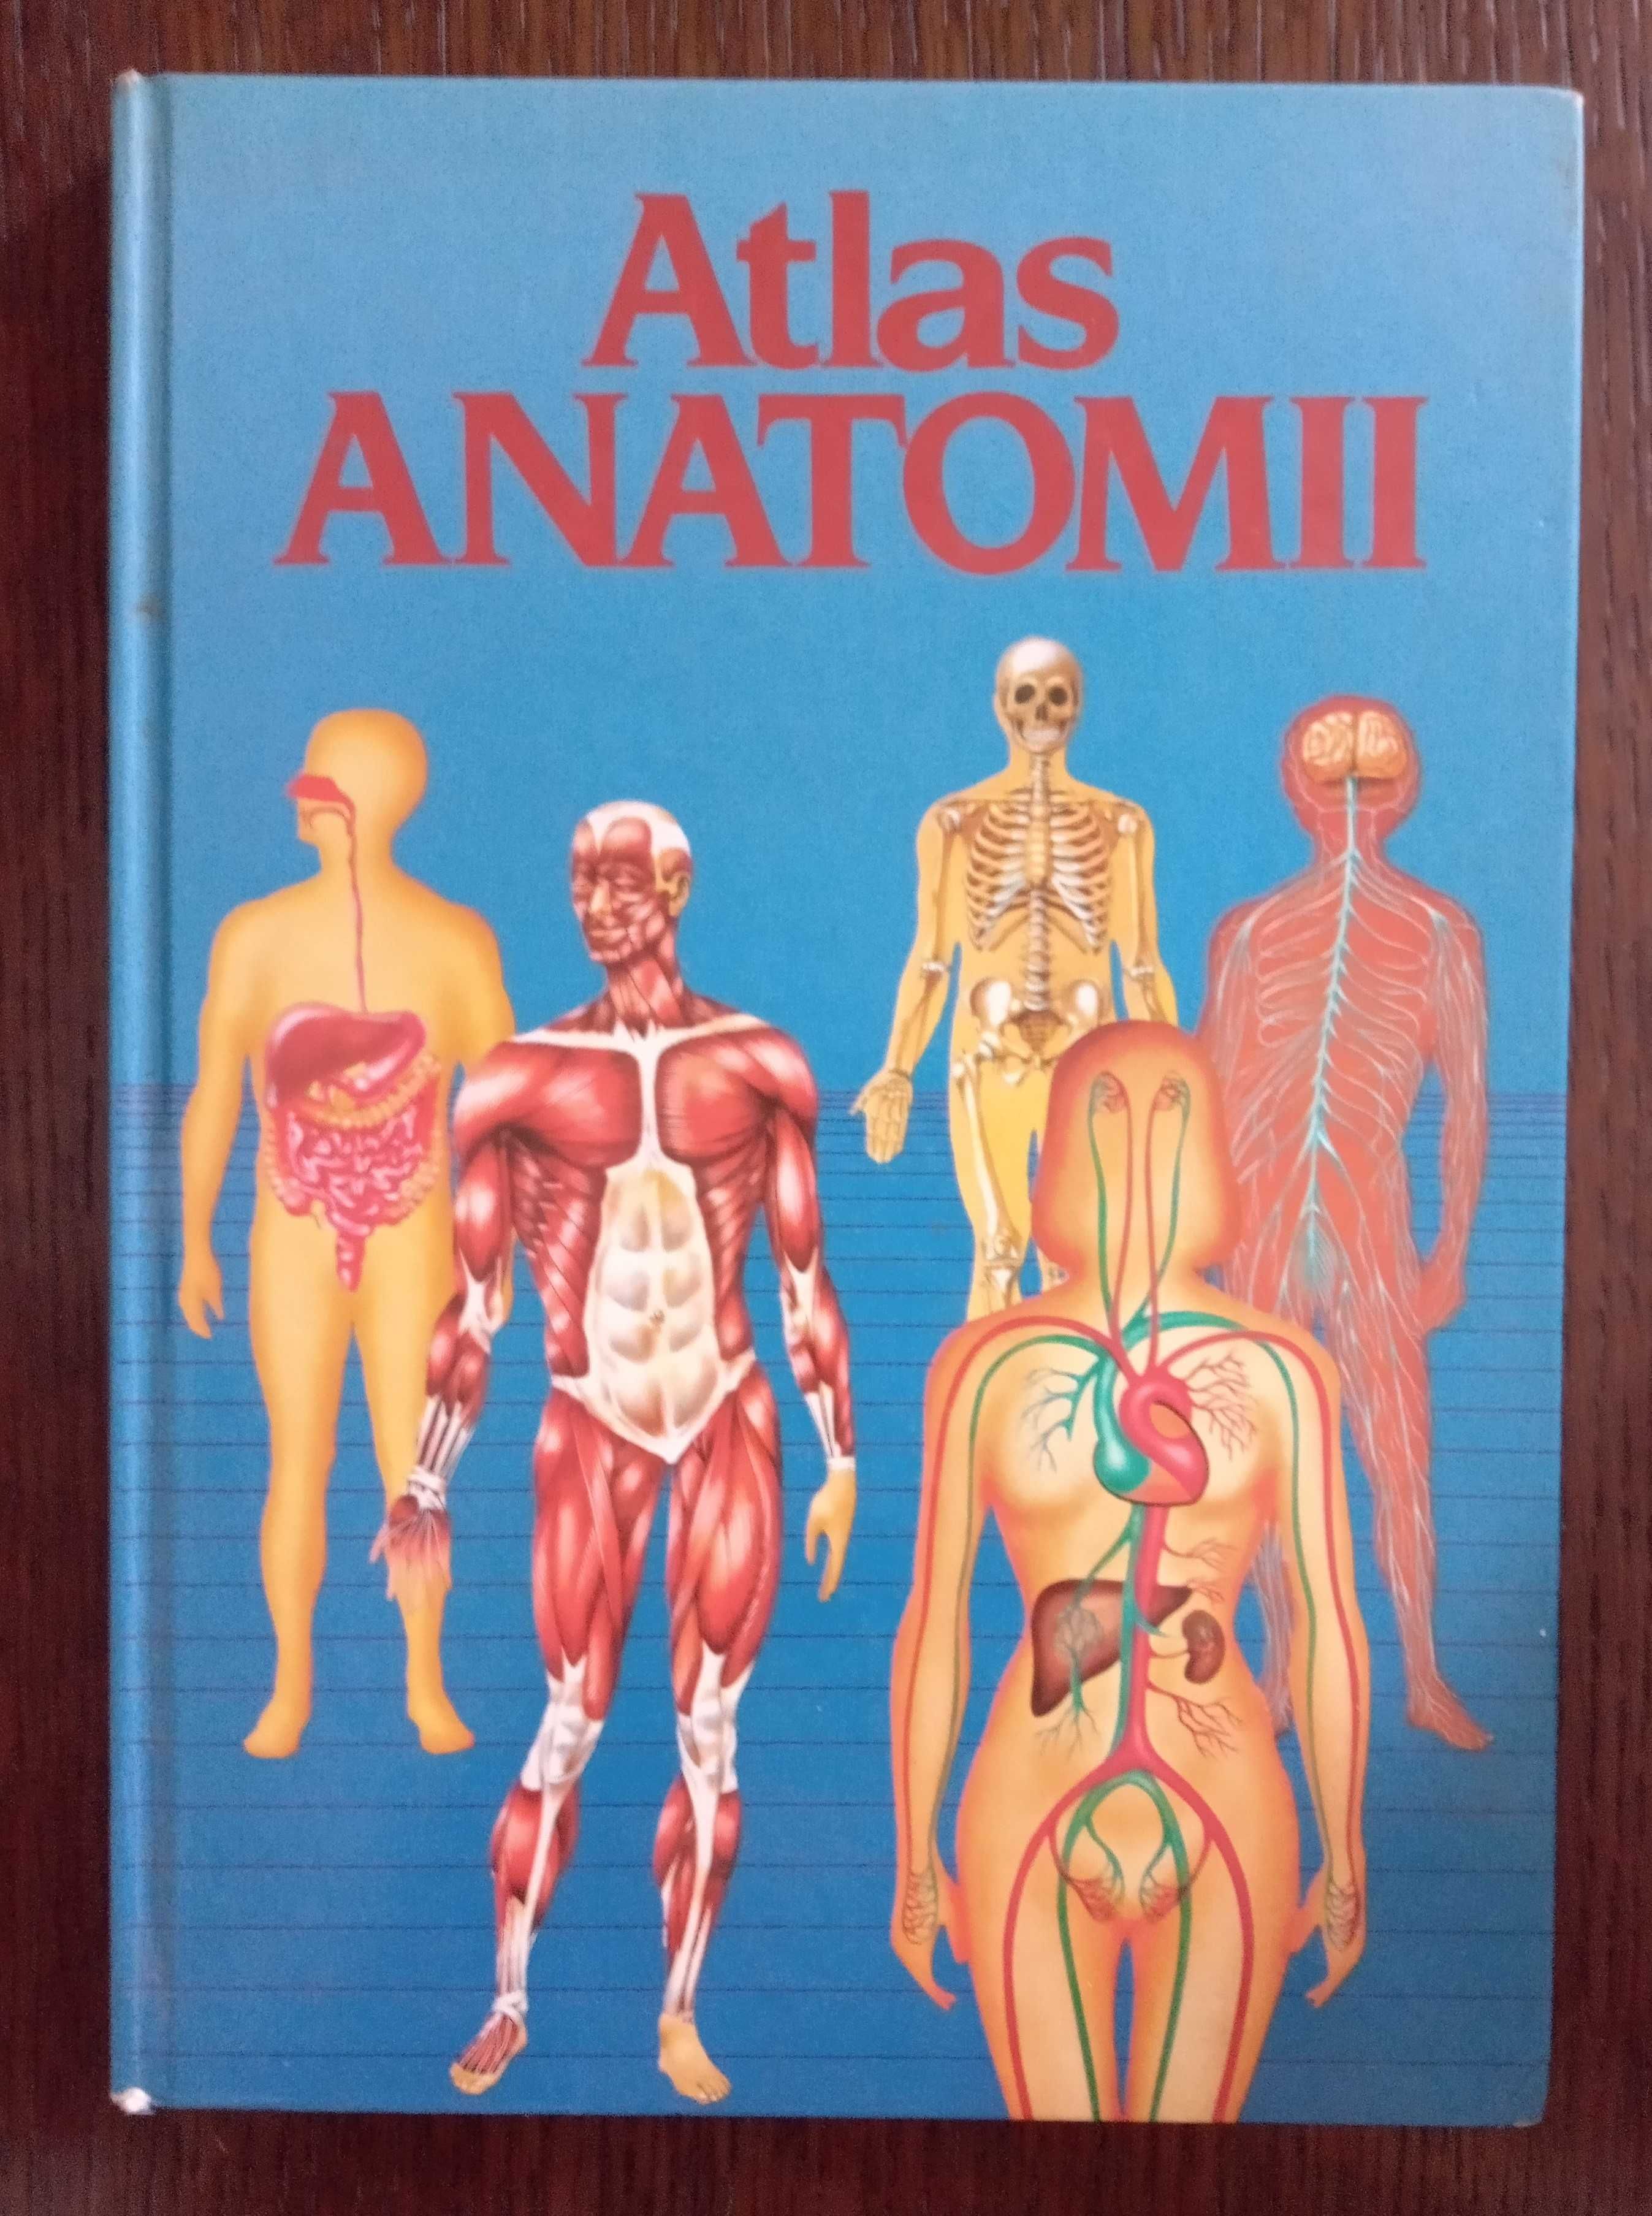 Atlas anatomii - Enric Gil de Bernabe Ortega